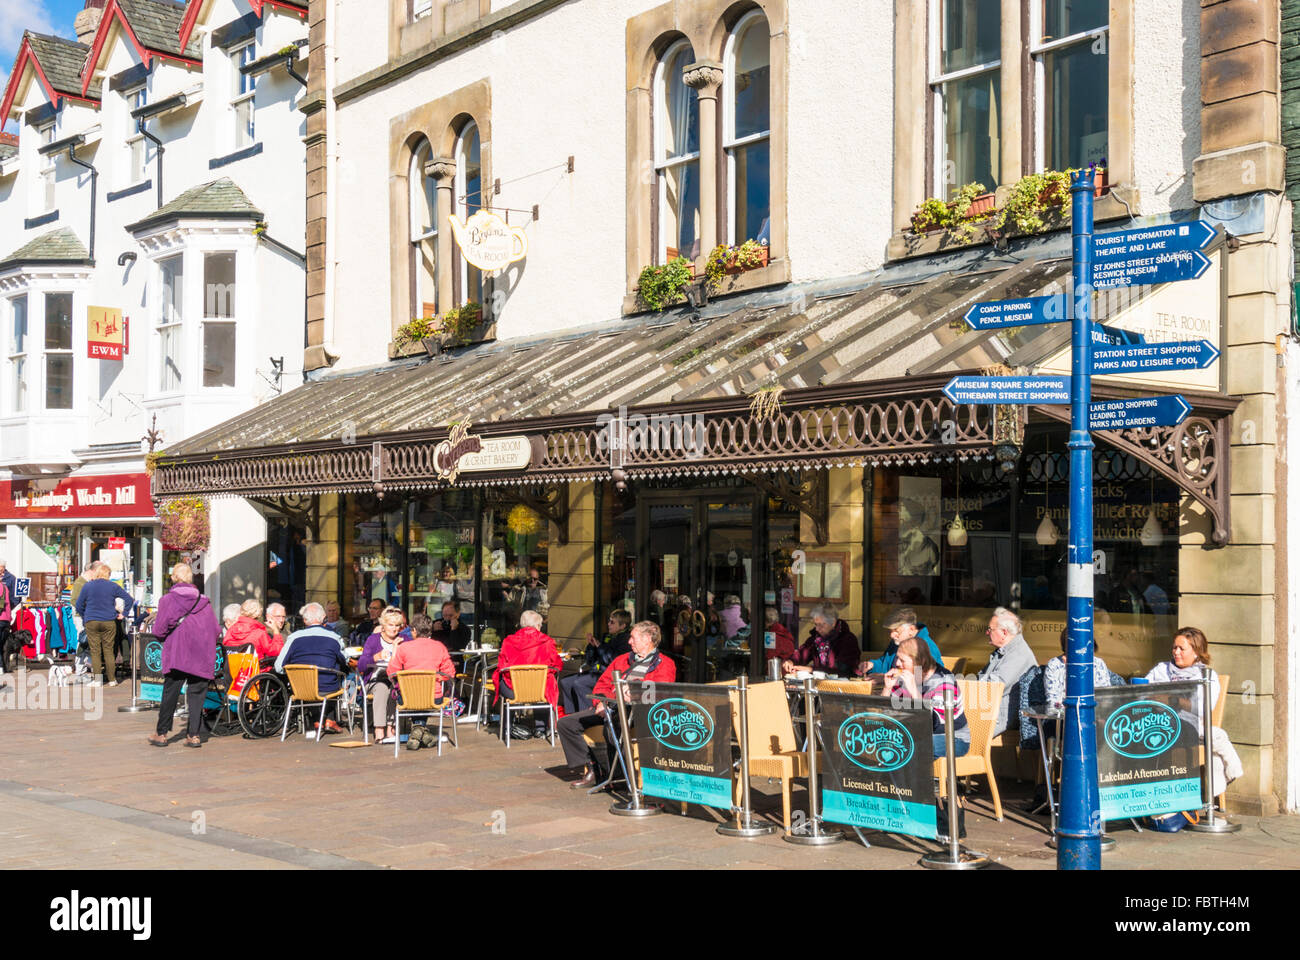 Brysons di Keswick panificio, caffetteria e sale da tè in Main Street Keswick Cumbria Lake District Inghilterra uk gb eu europe Foto Stock